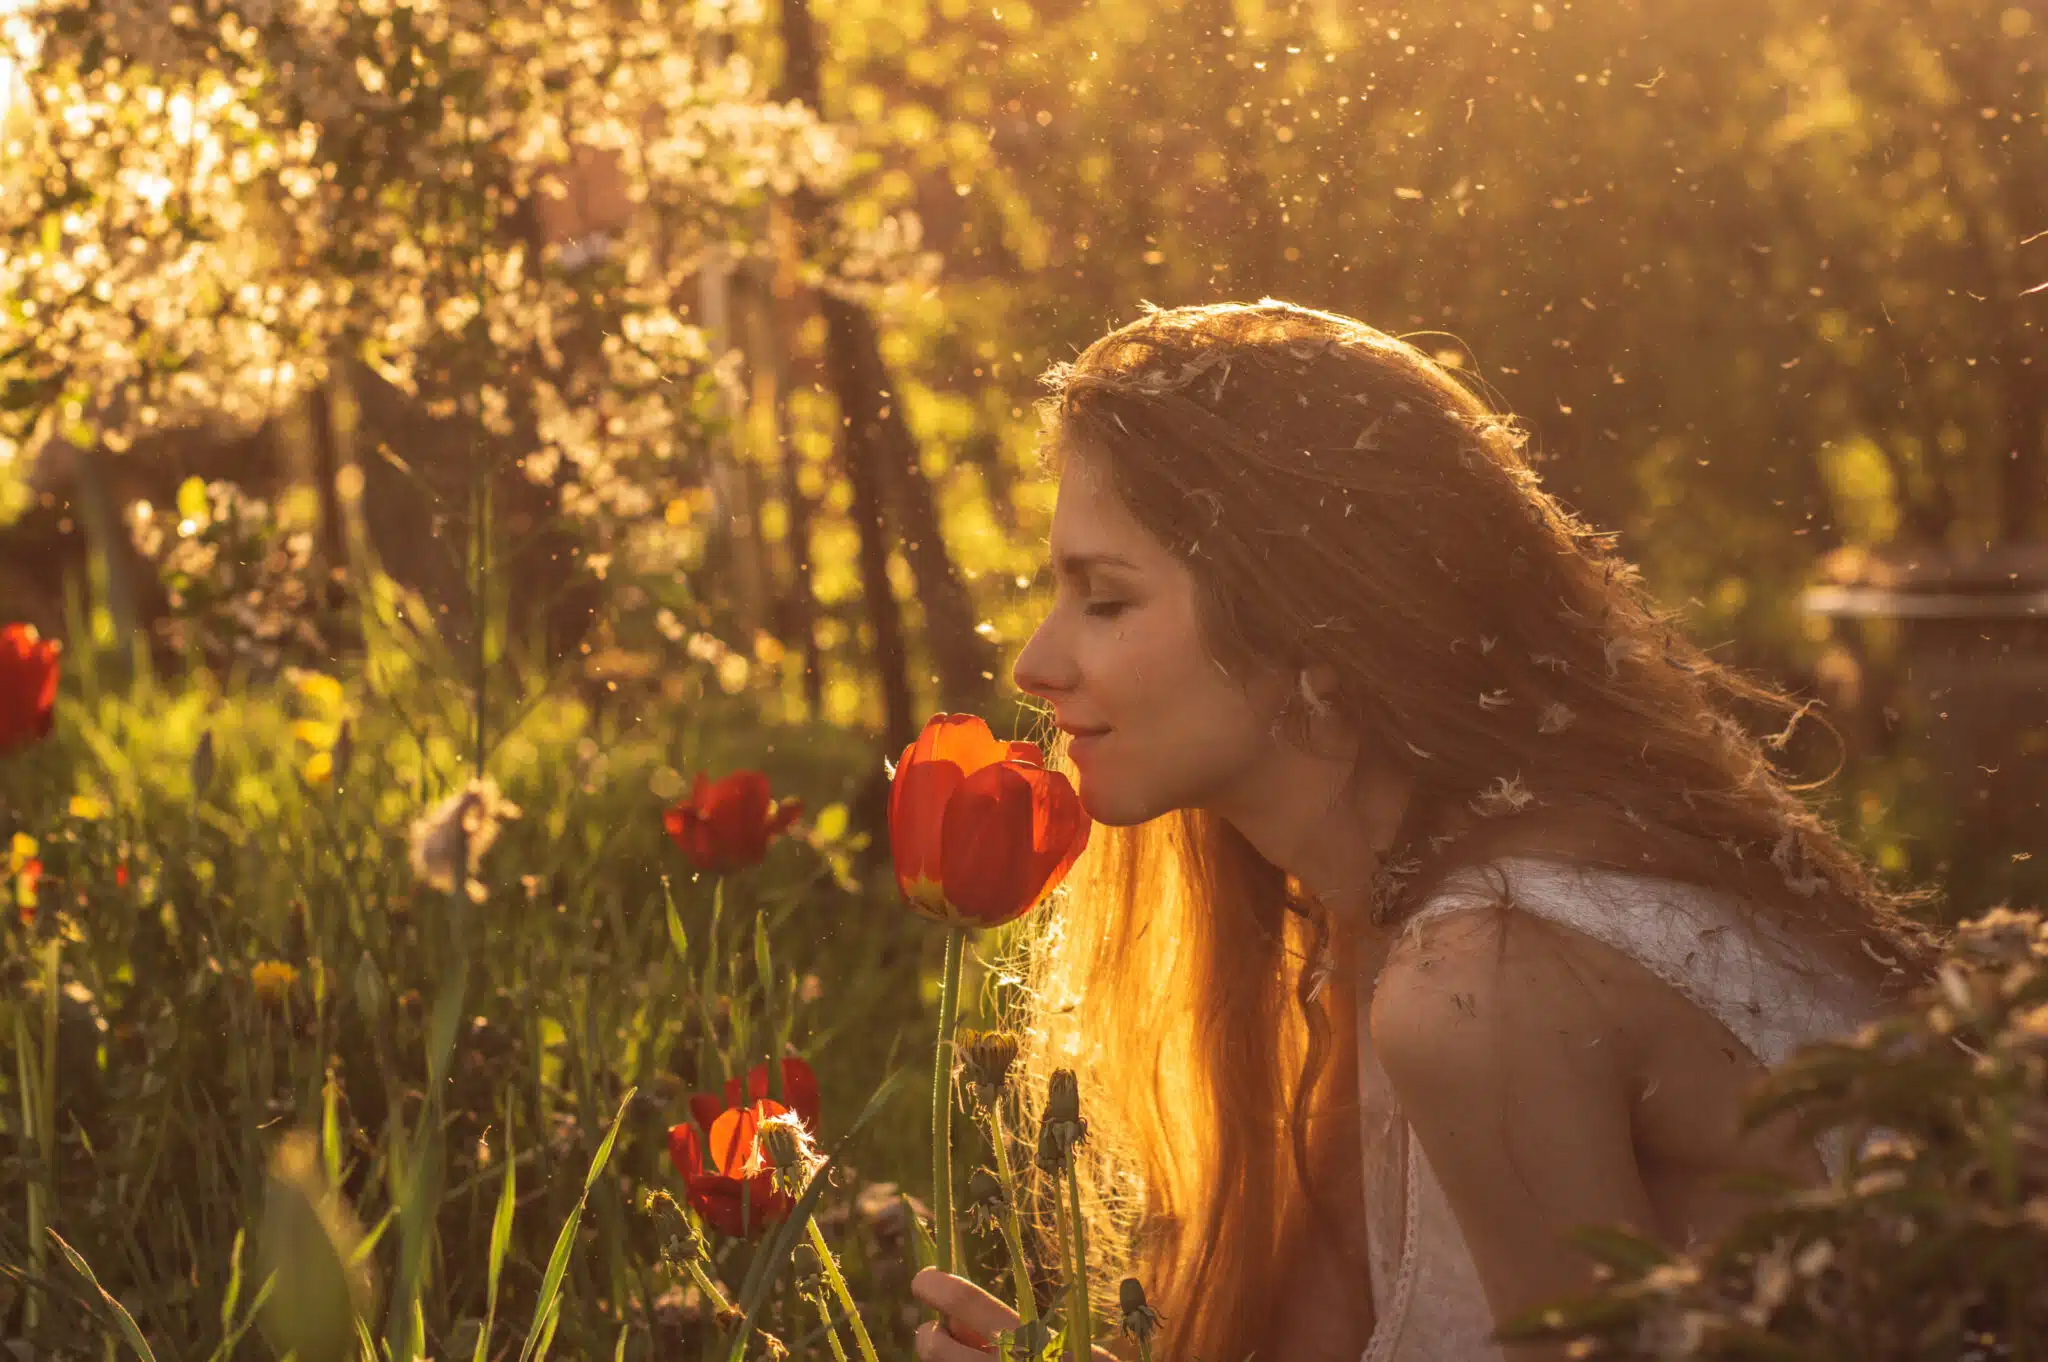 Girl in white dress smelling tulip in sunset among dandelions